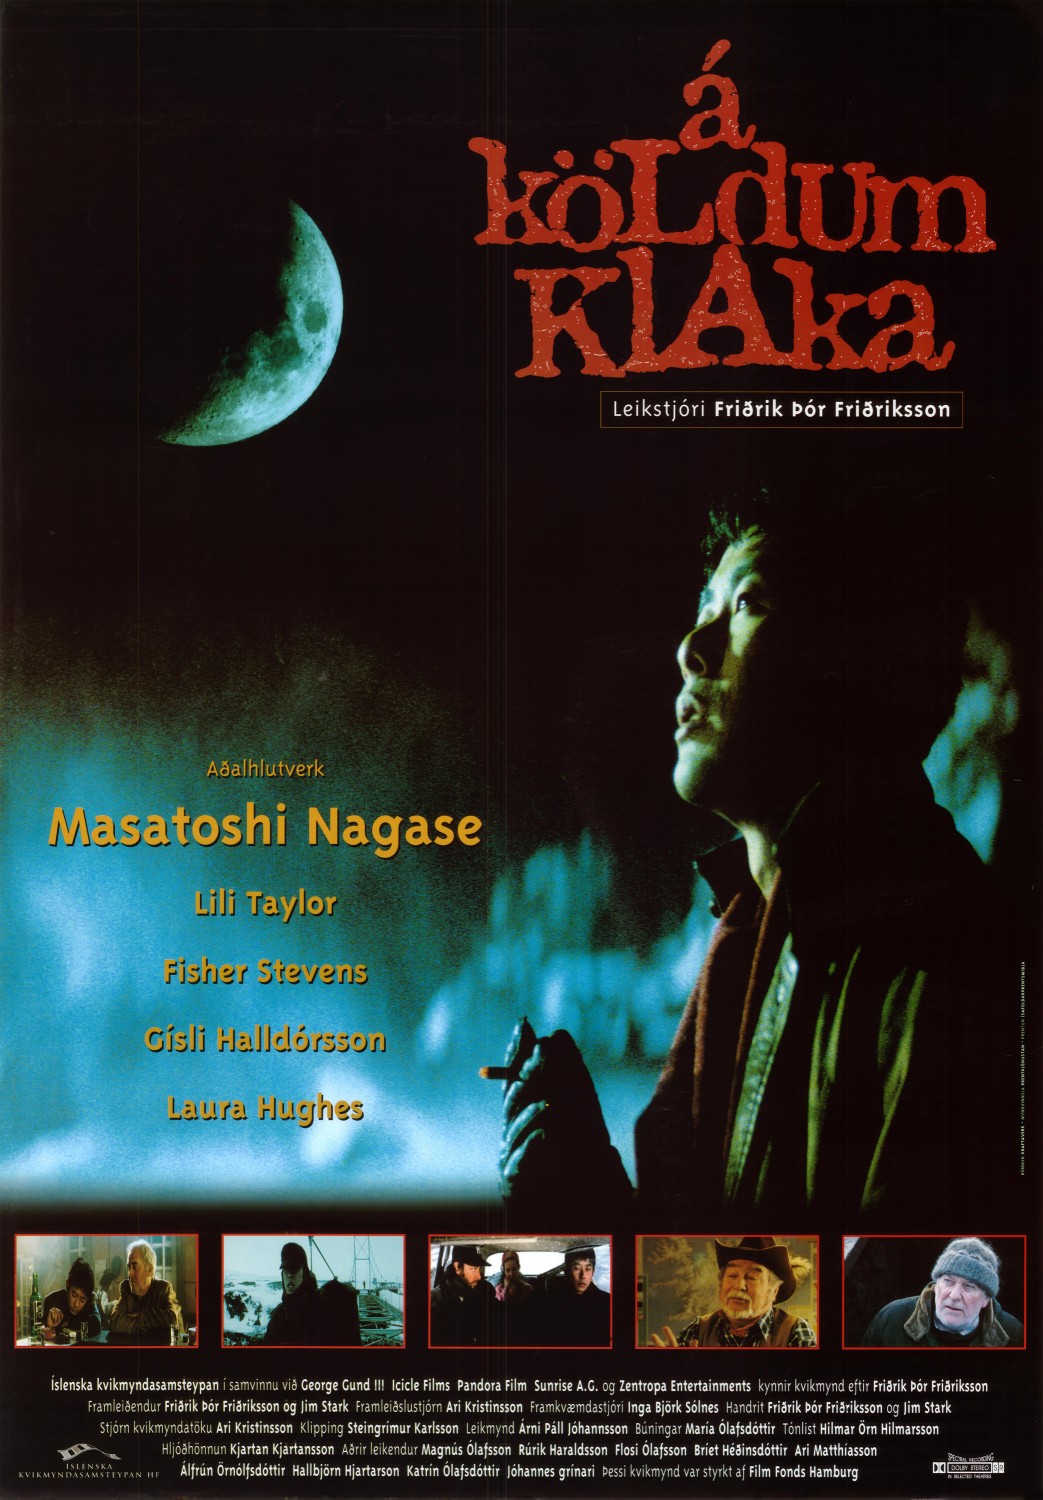 Extra Large Movie Poster Image for Á köldum klaka 